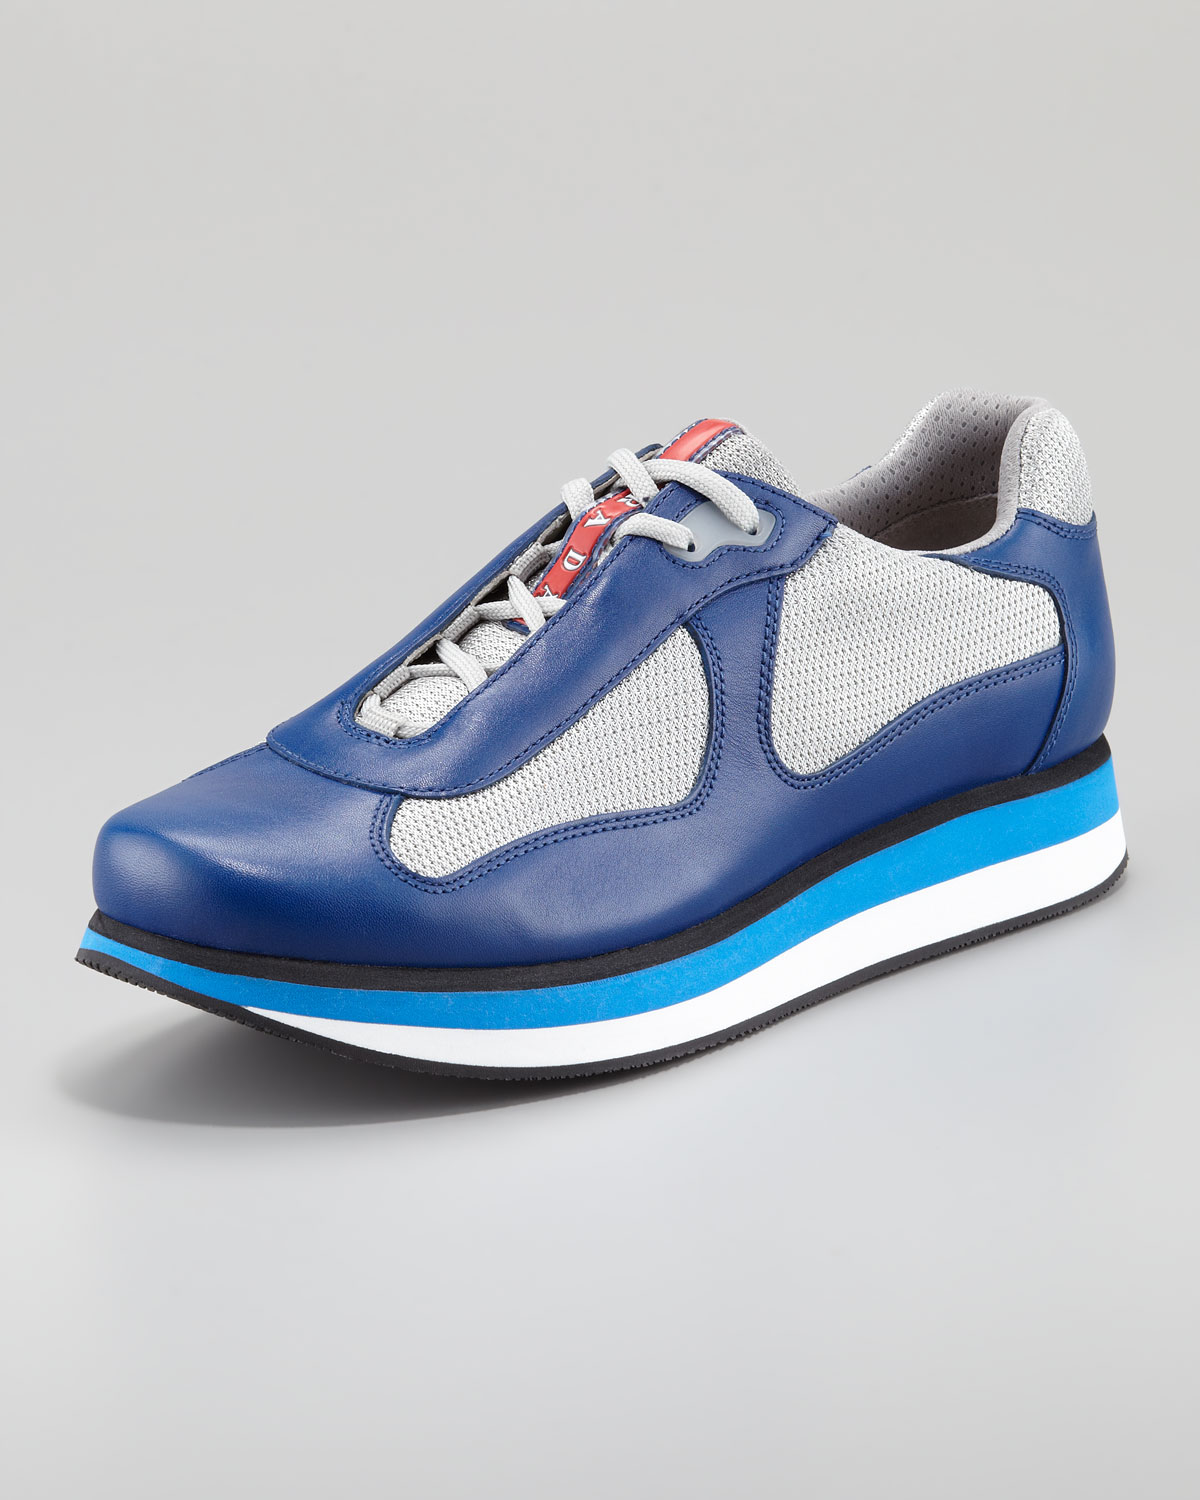 Lyst - Prada Tricolor Micro Sole Sneaker Blue in Blue for Men